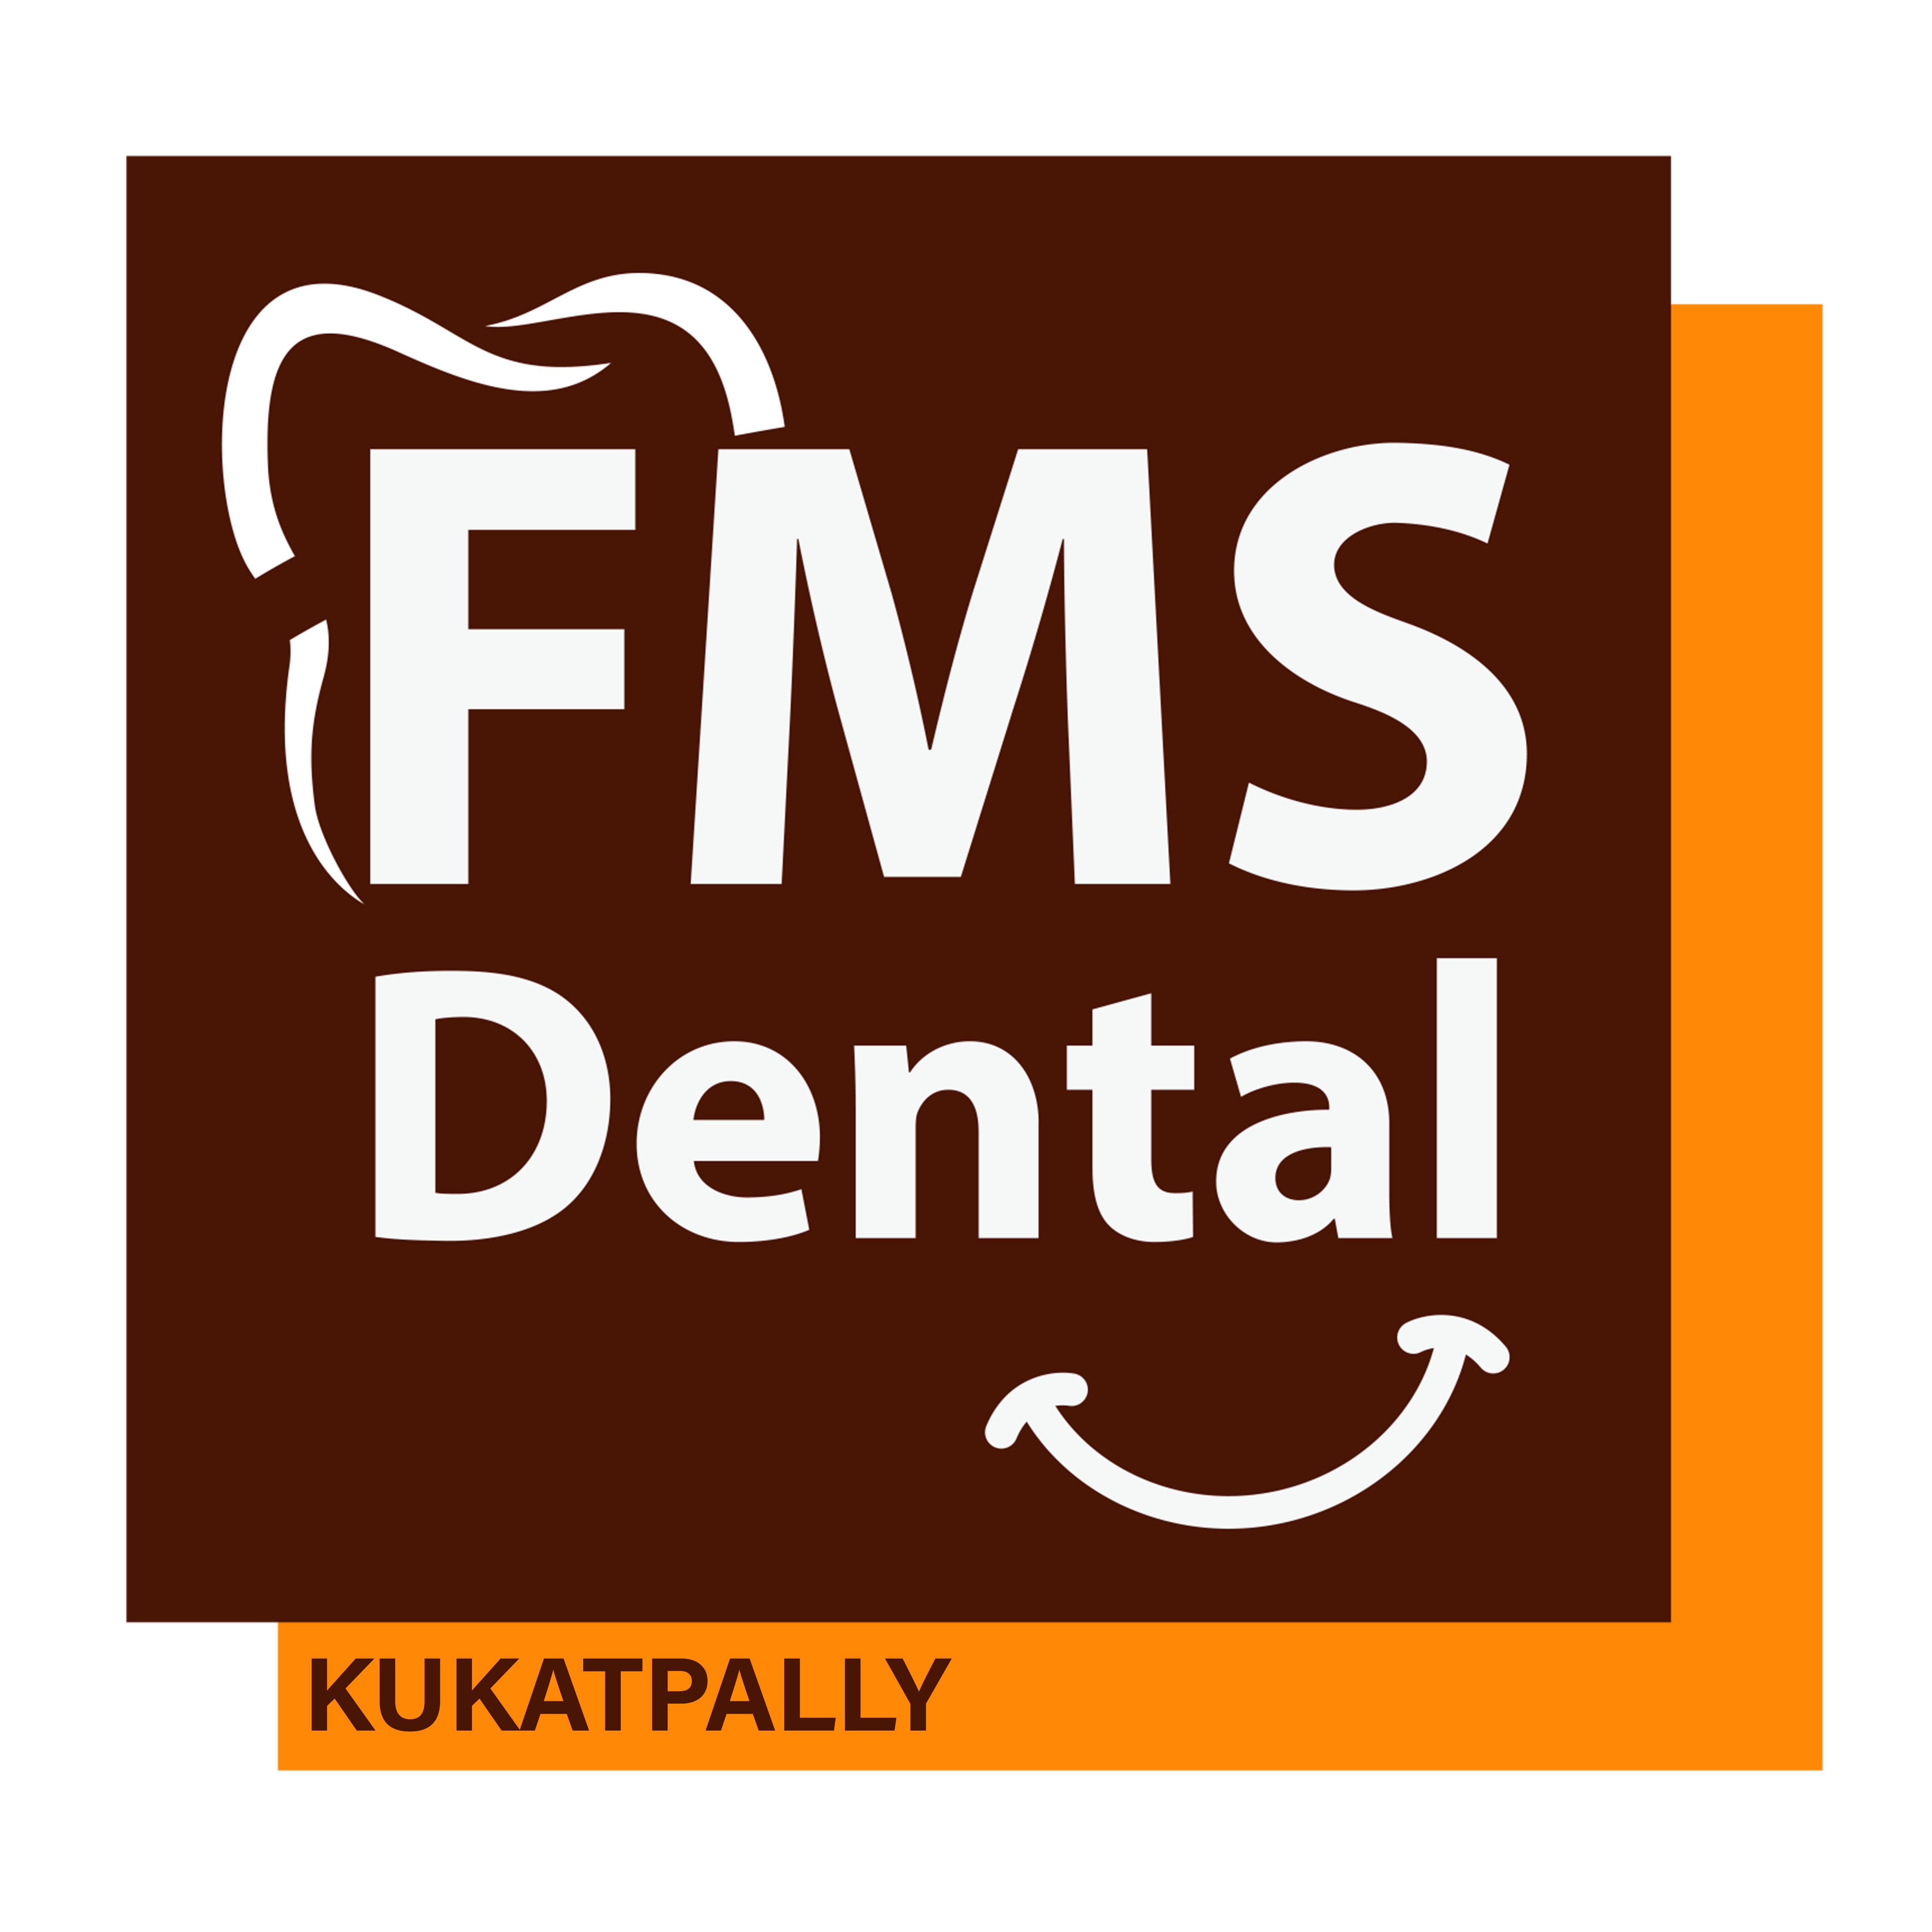 FMS DENTAL Madinaguda|Clinics|Medical Services